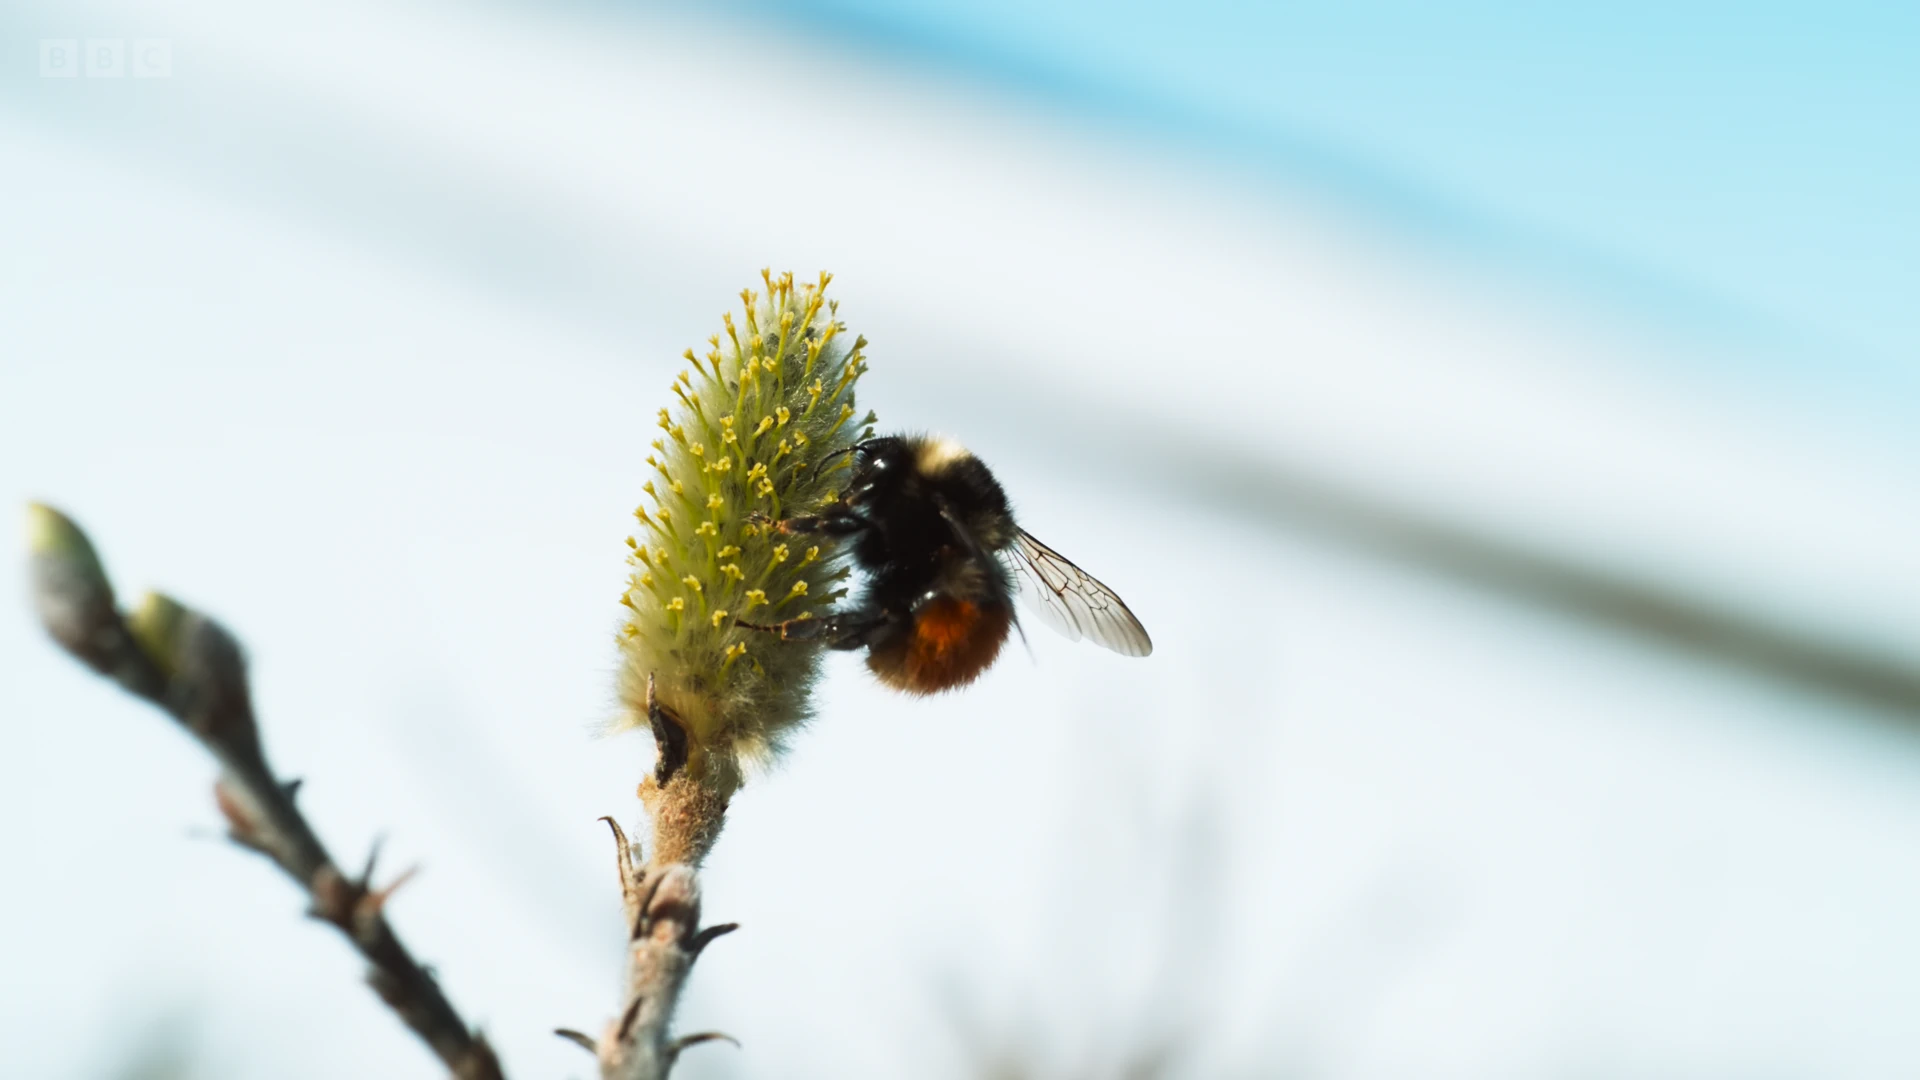 Lapland bumblebee (Bombus lapponicus) as shown in Frozen Planet II - Frozen Lands